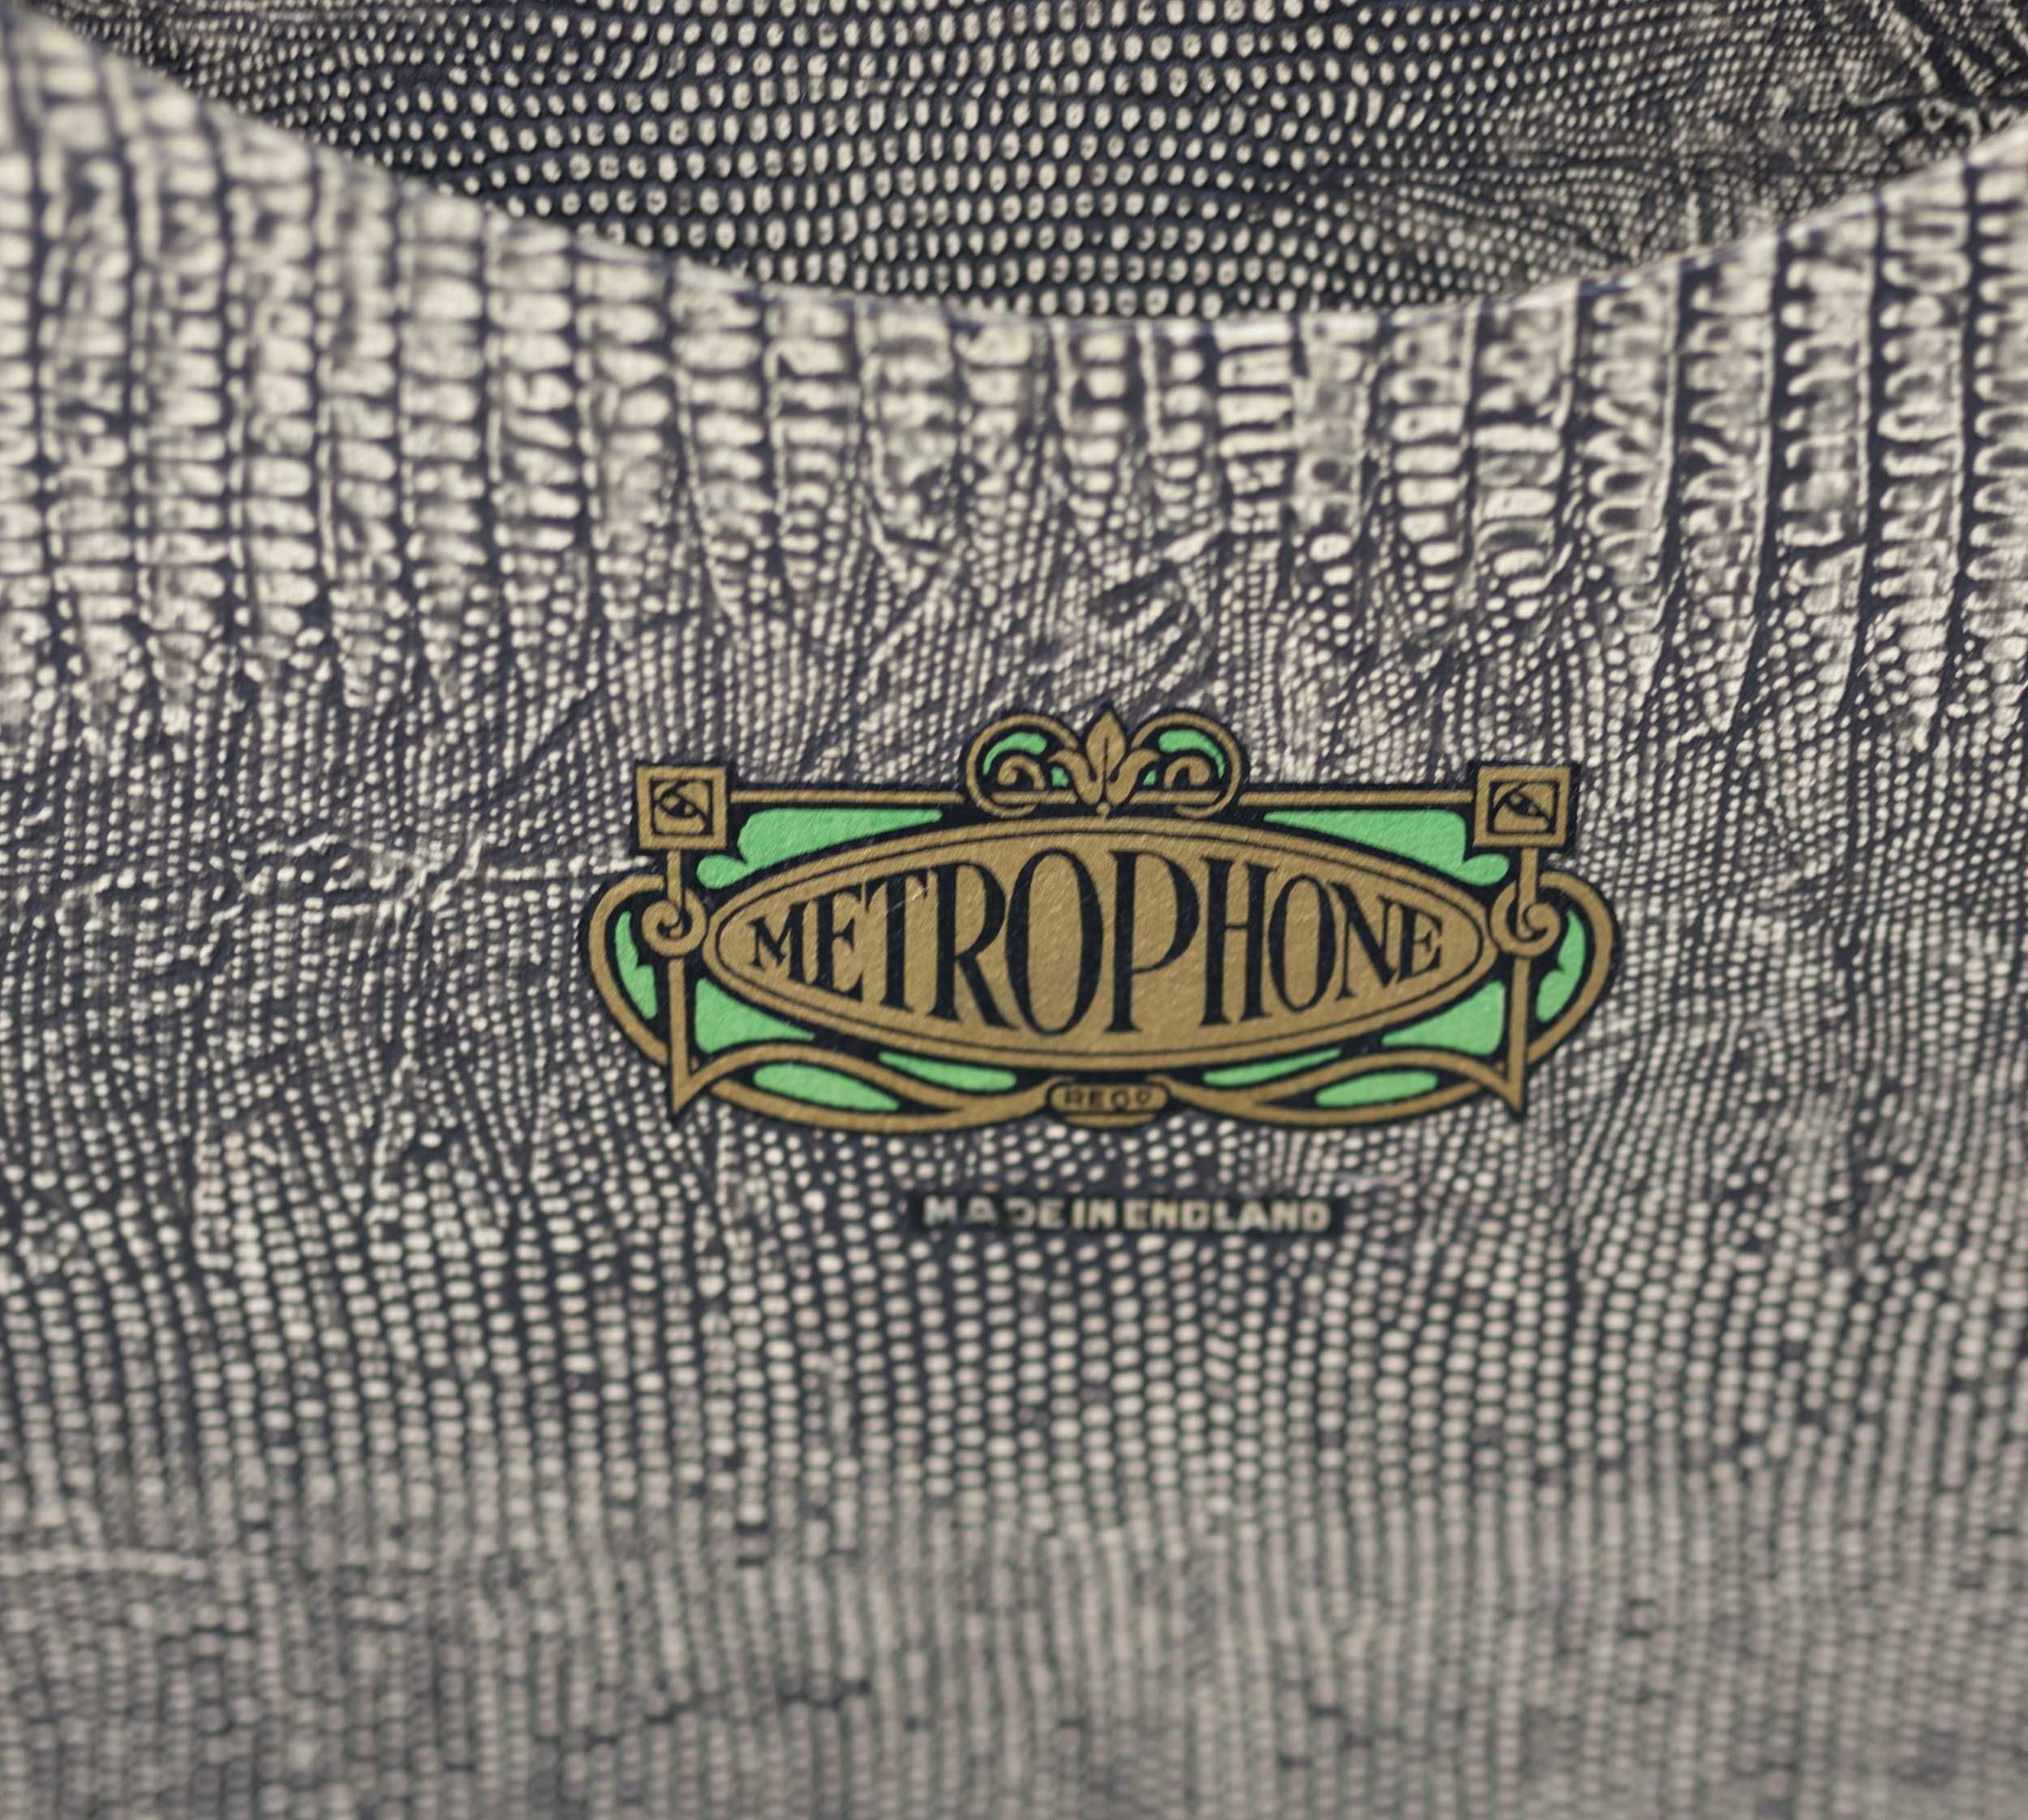 gramofon Metrophone